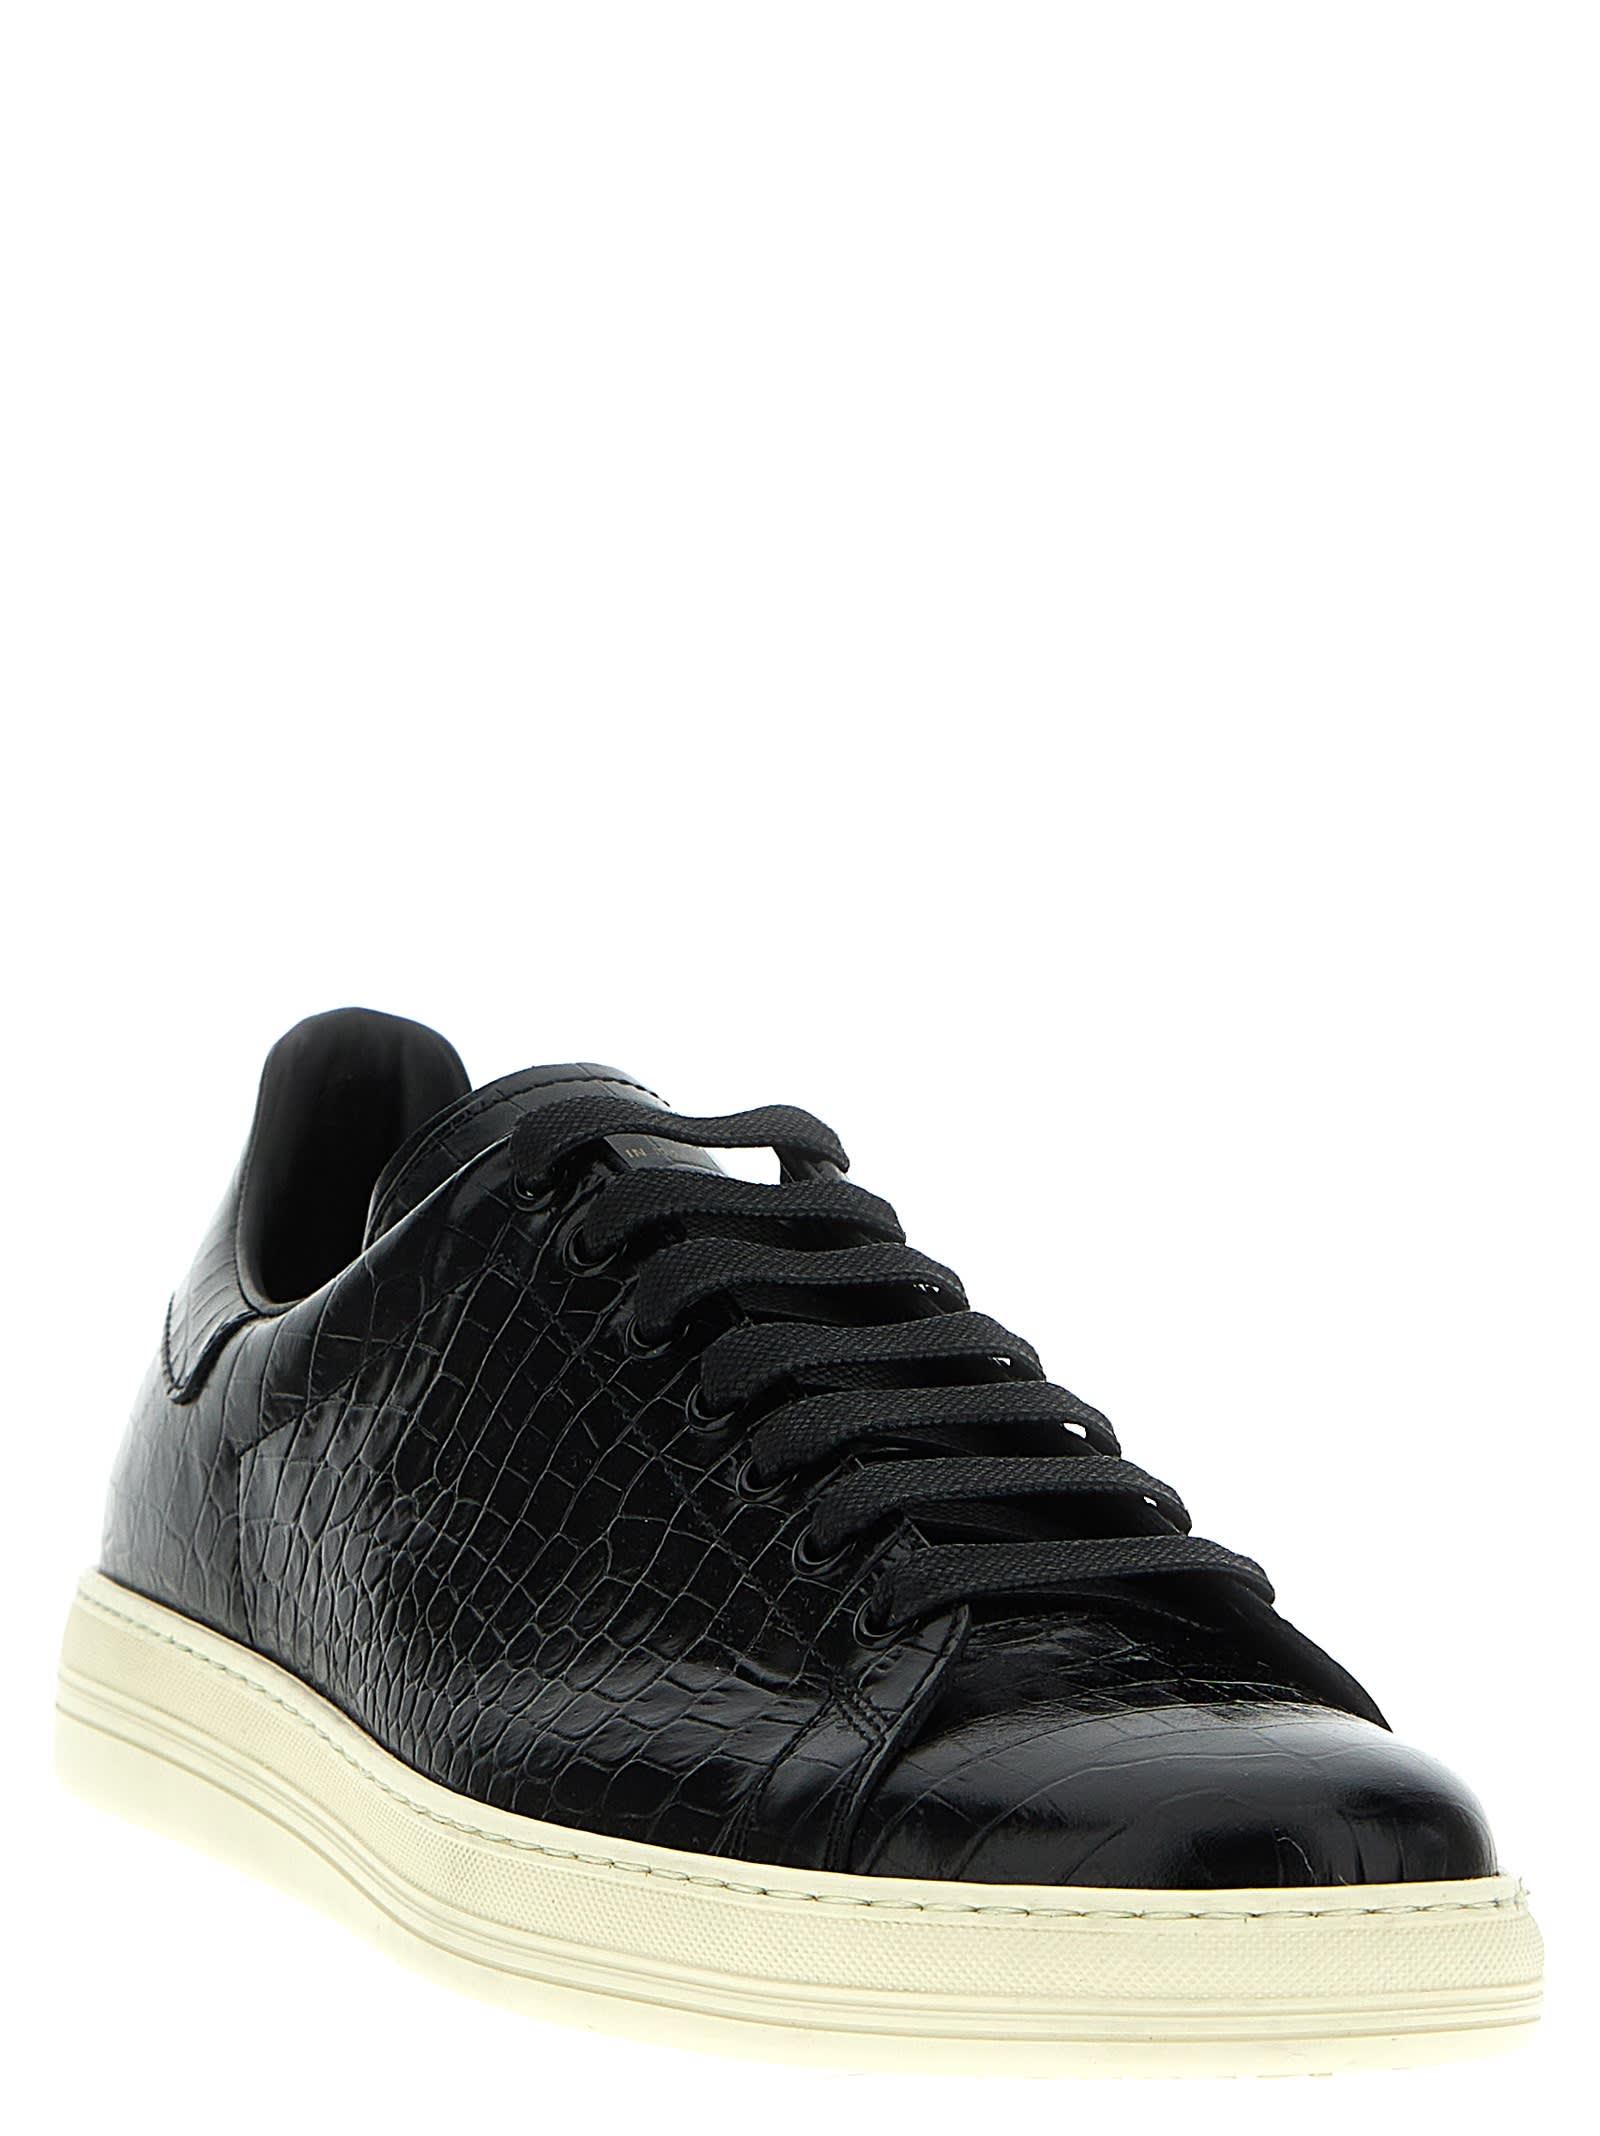 Shop Tom Ford Croc Print Sneakers In Black/neutrals